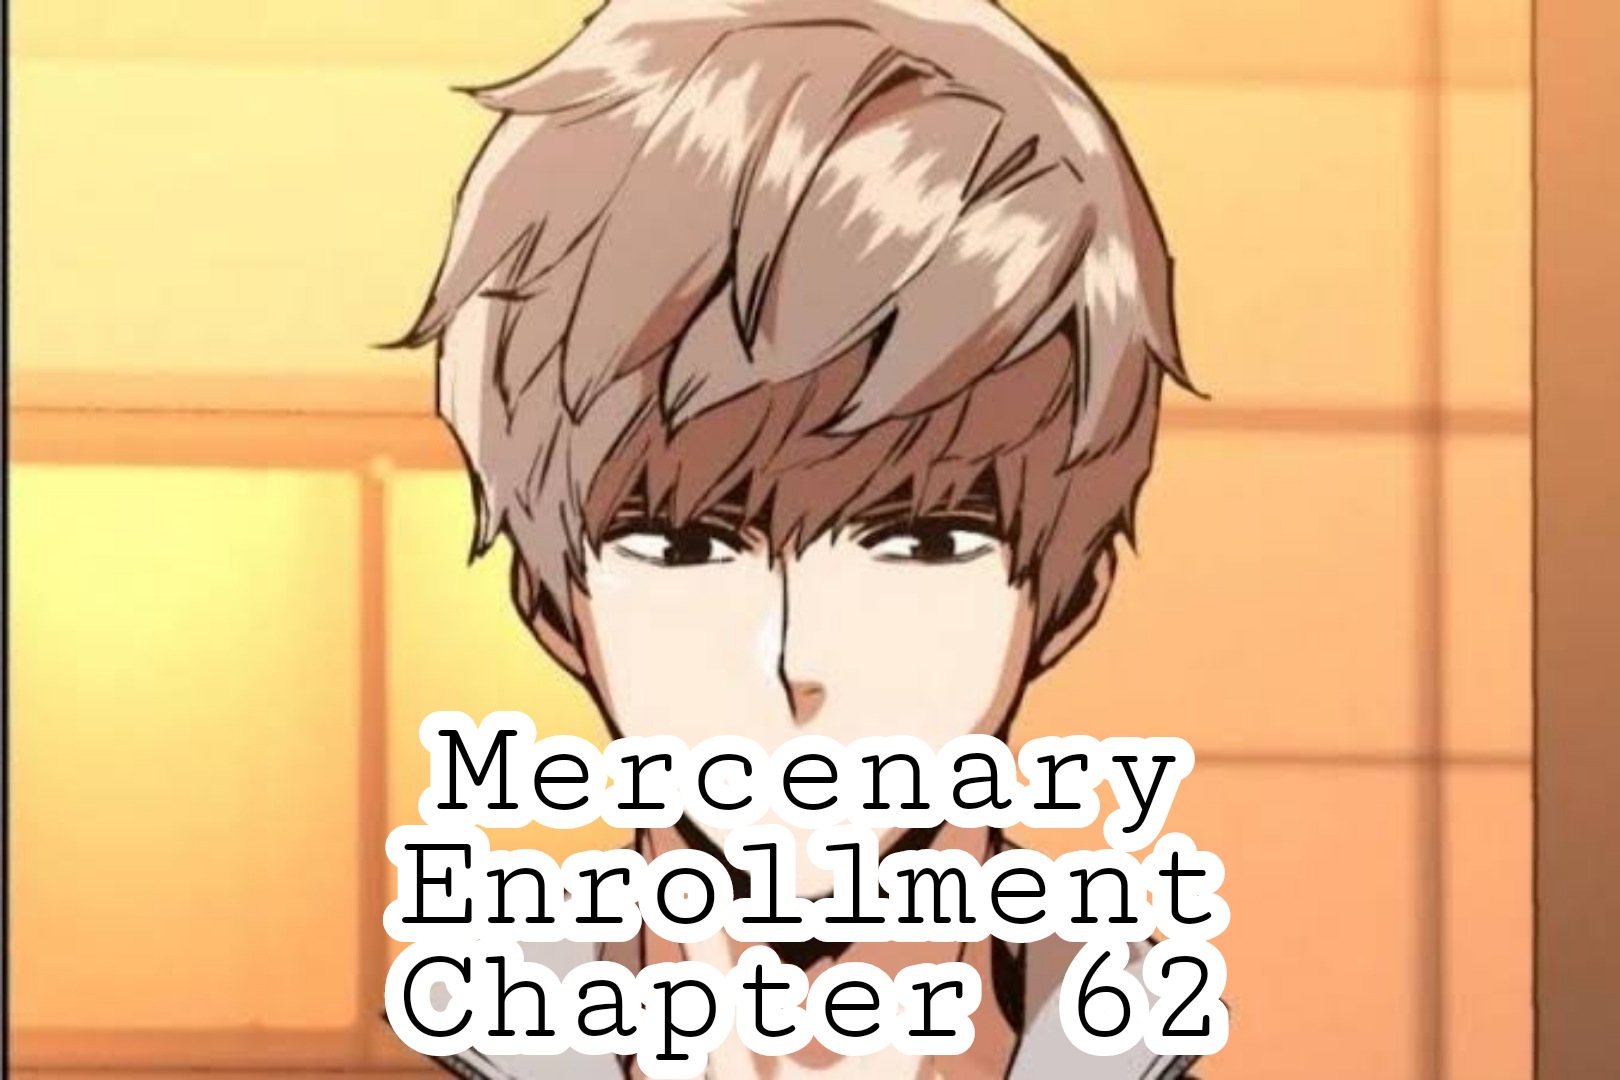 Манга прирожденный наемник 178. Mercenary Enrollment. Mercenary Enrollment Manga. Манхва Mercenary Enrollment. Mercenary Enrollment pls like and Subscribe.